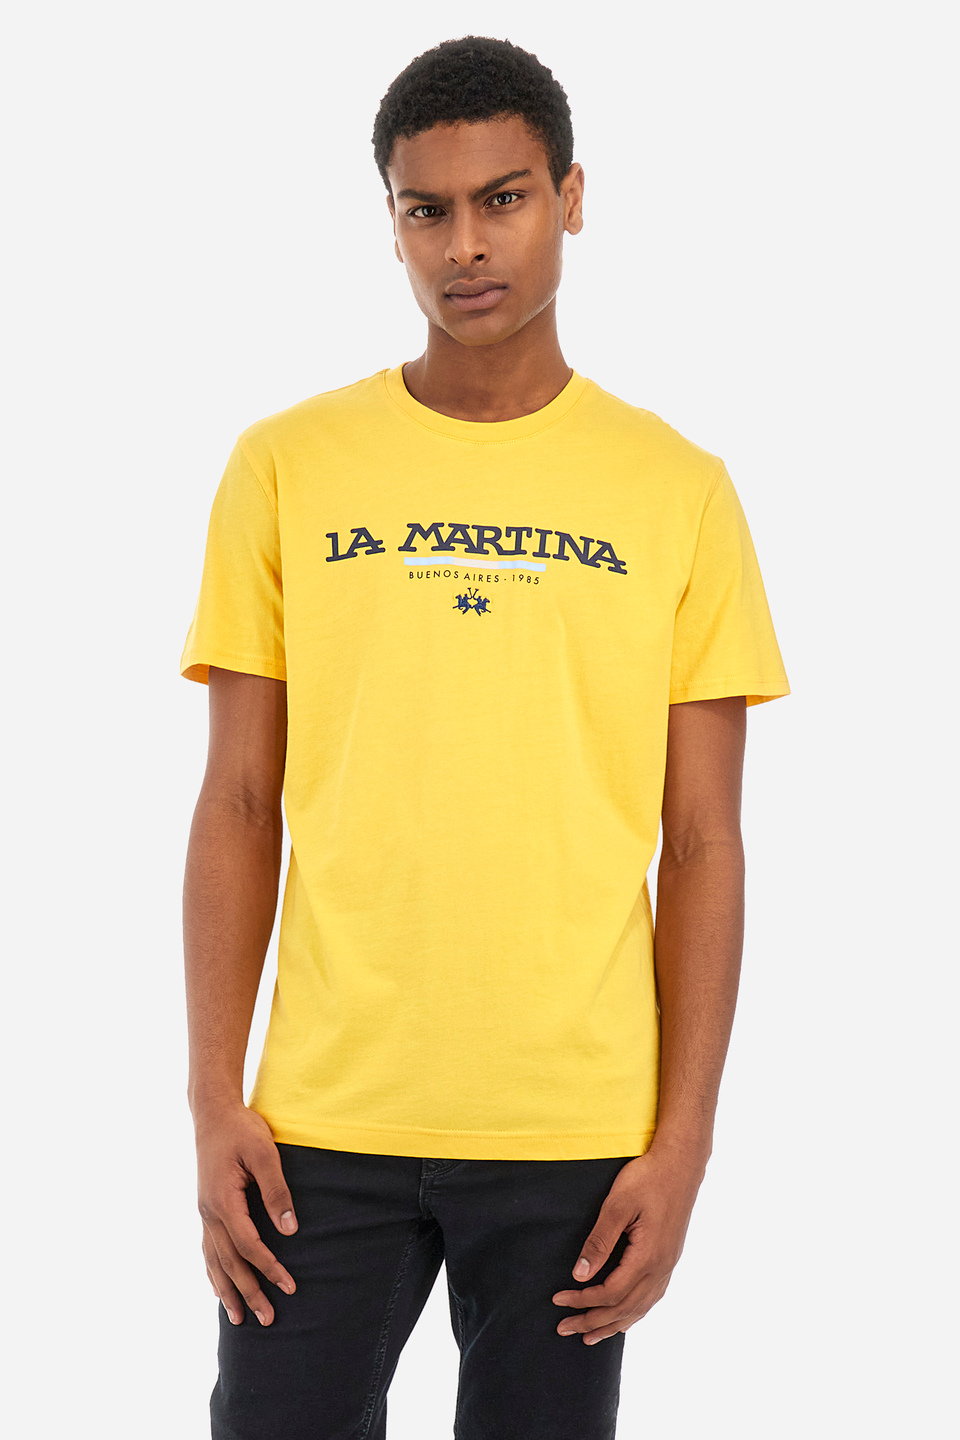 Tee-shirt homme coupe classique - Winford | La Martina - Official Online Shop